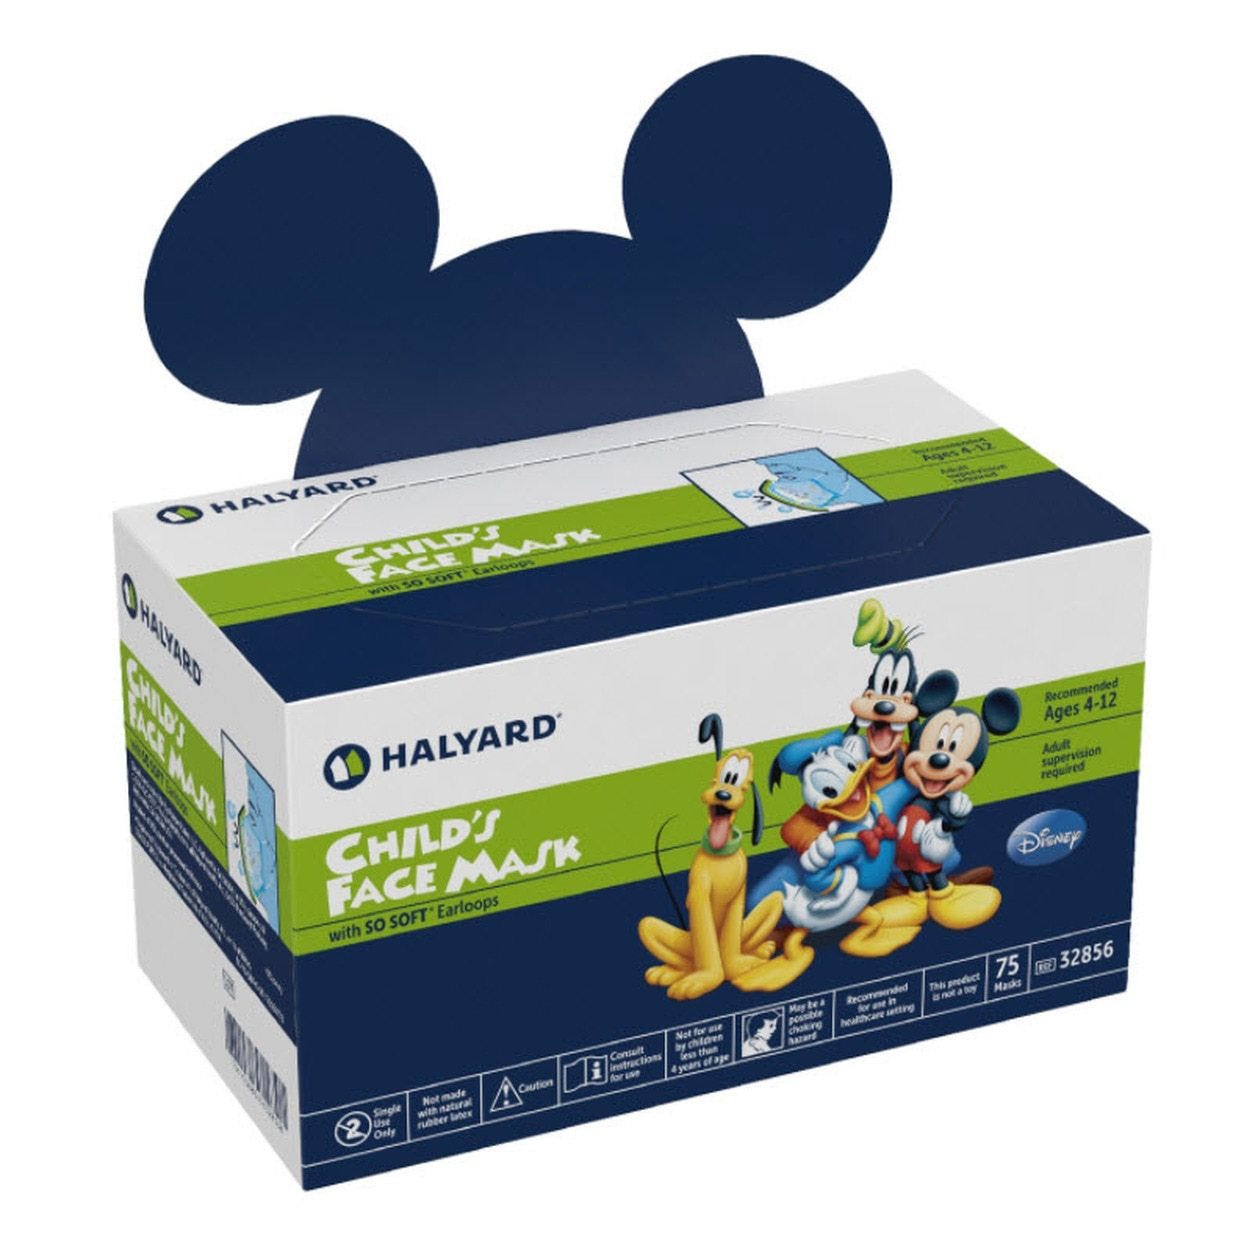 Child's Face Mask, Disney ®, Ages 4-12 - 75/Box